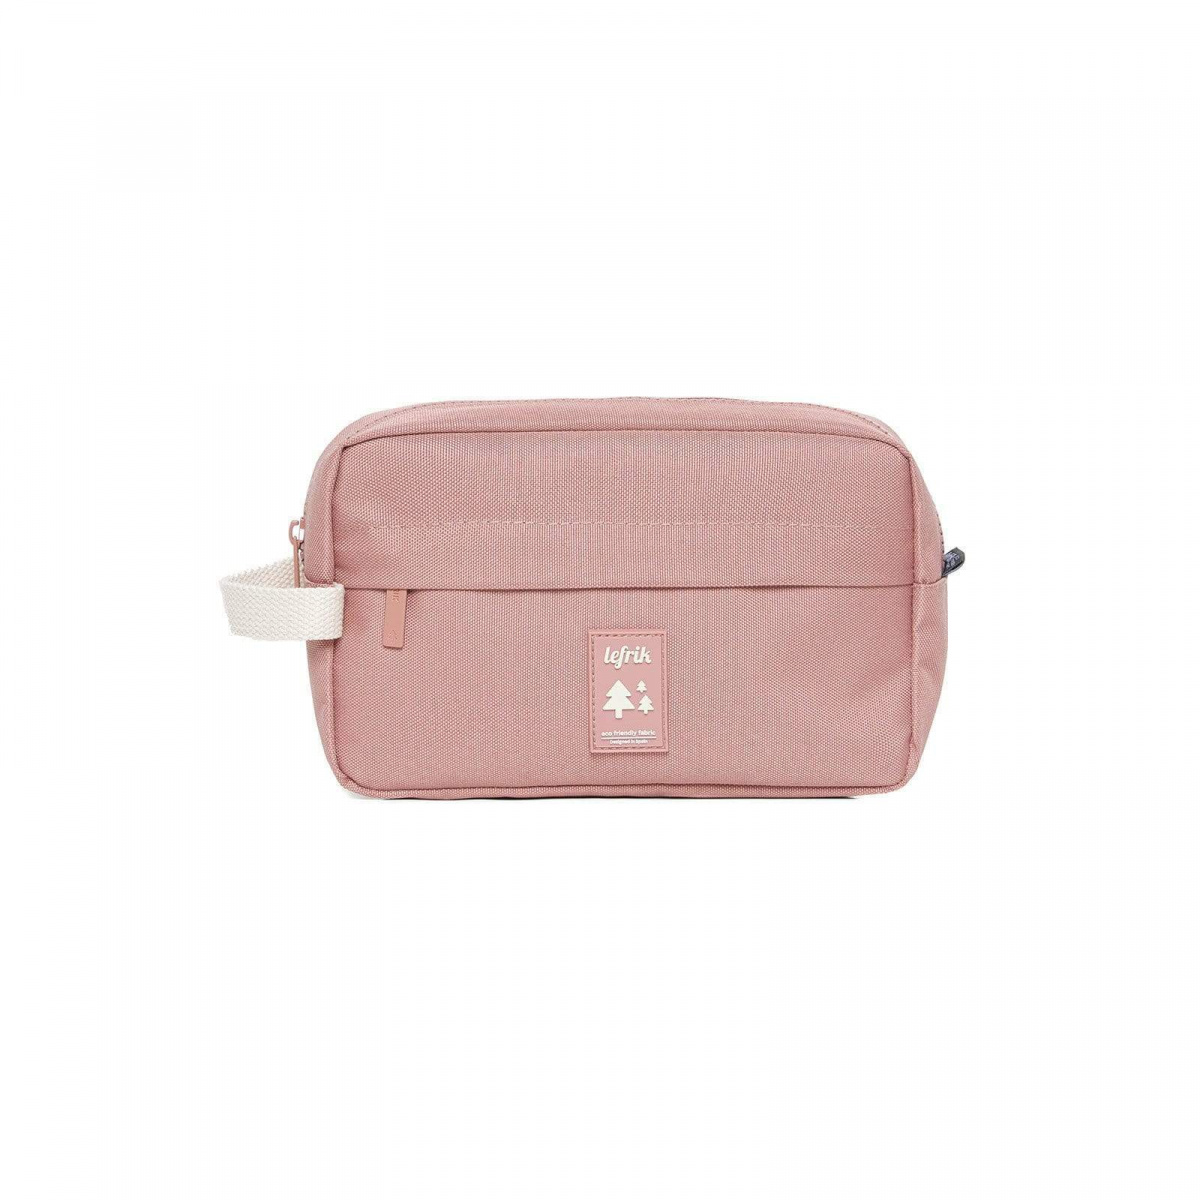 Поясная сумка женская Lefrik Lithe Bag, dust pink